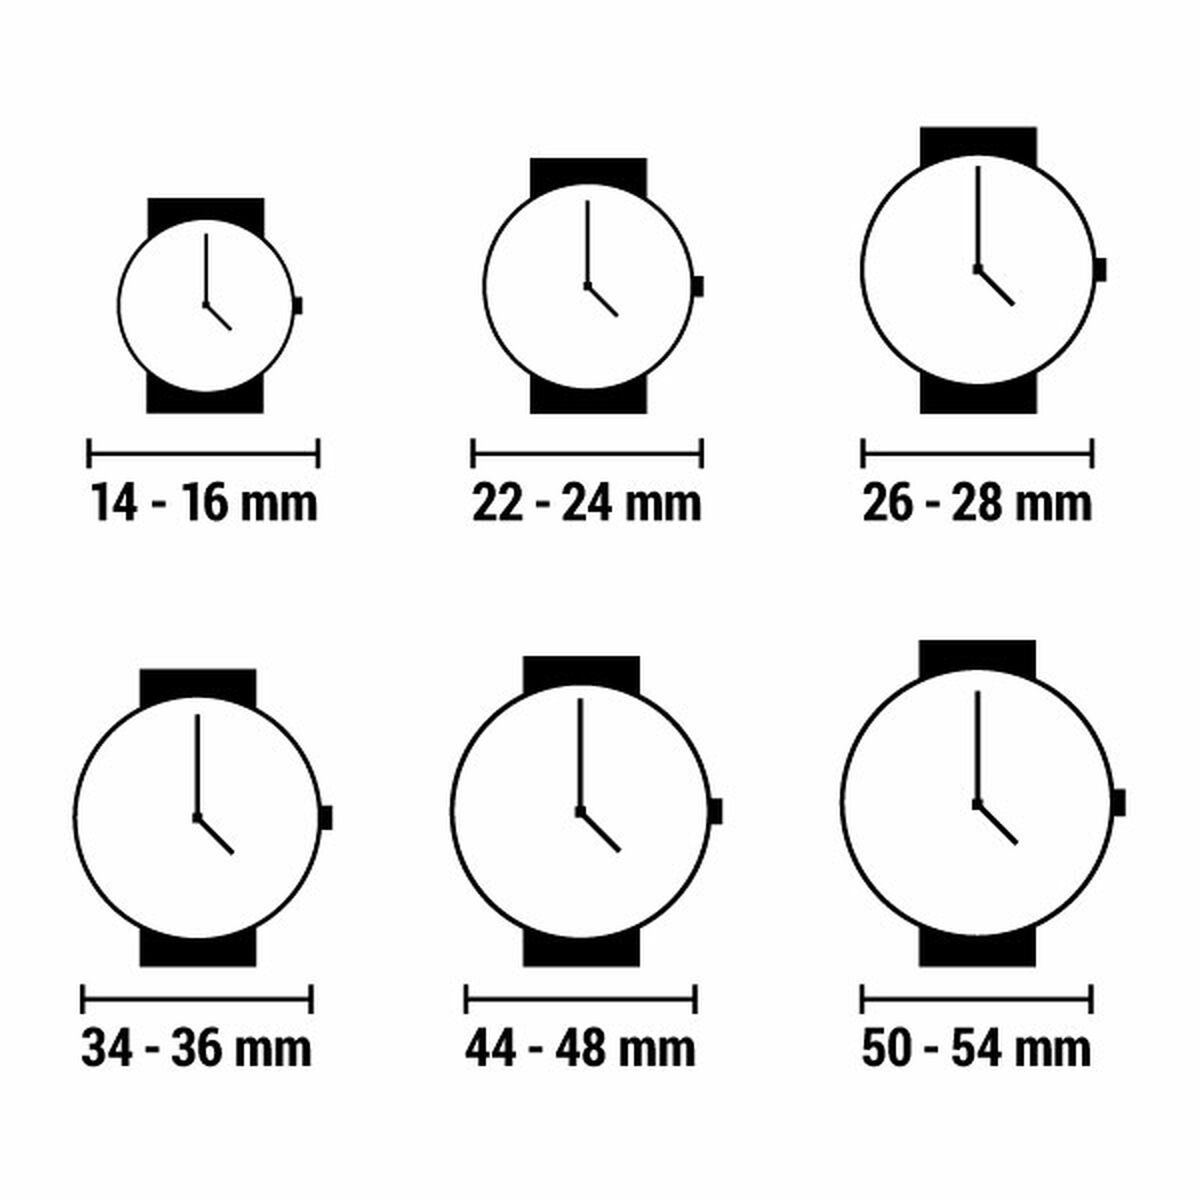 Horloge Dames Swatch YSS301